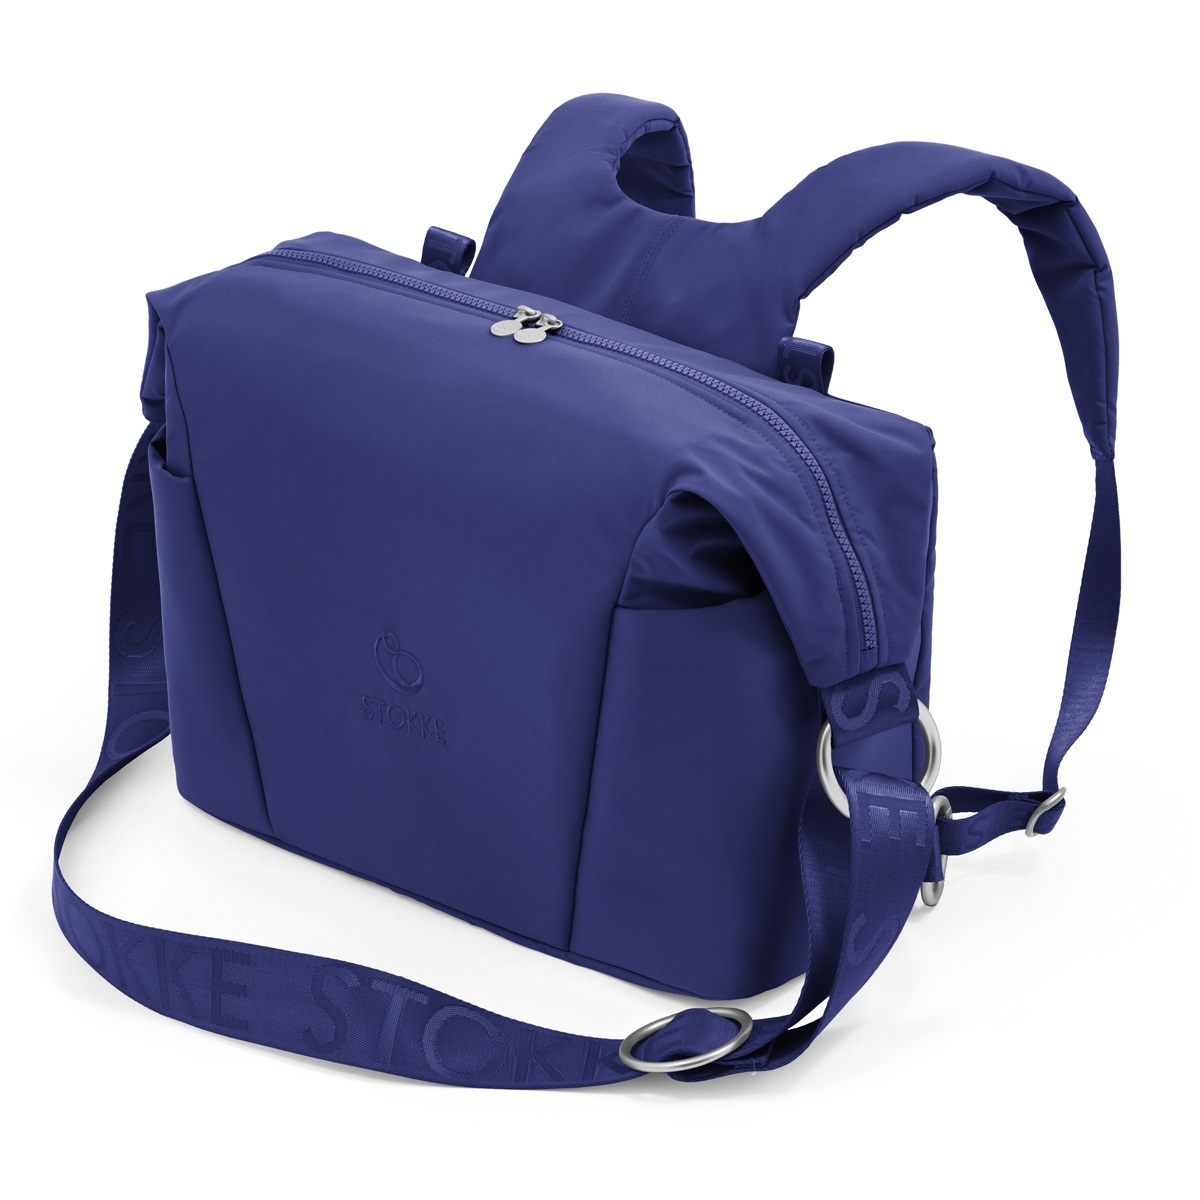 Сумка-рюкзак Stokke Xplory X Royal Blue (575103) - фото 3